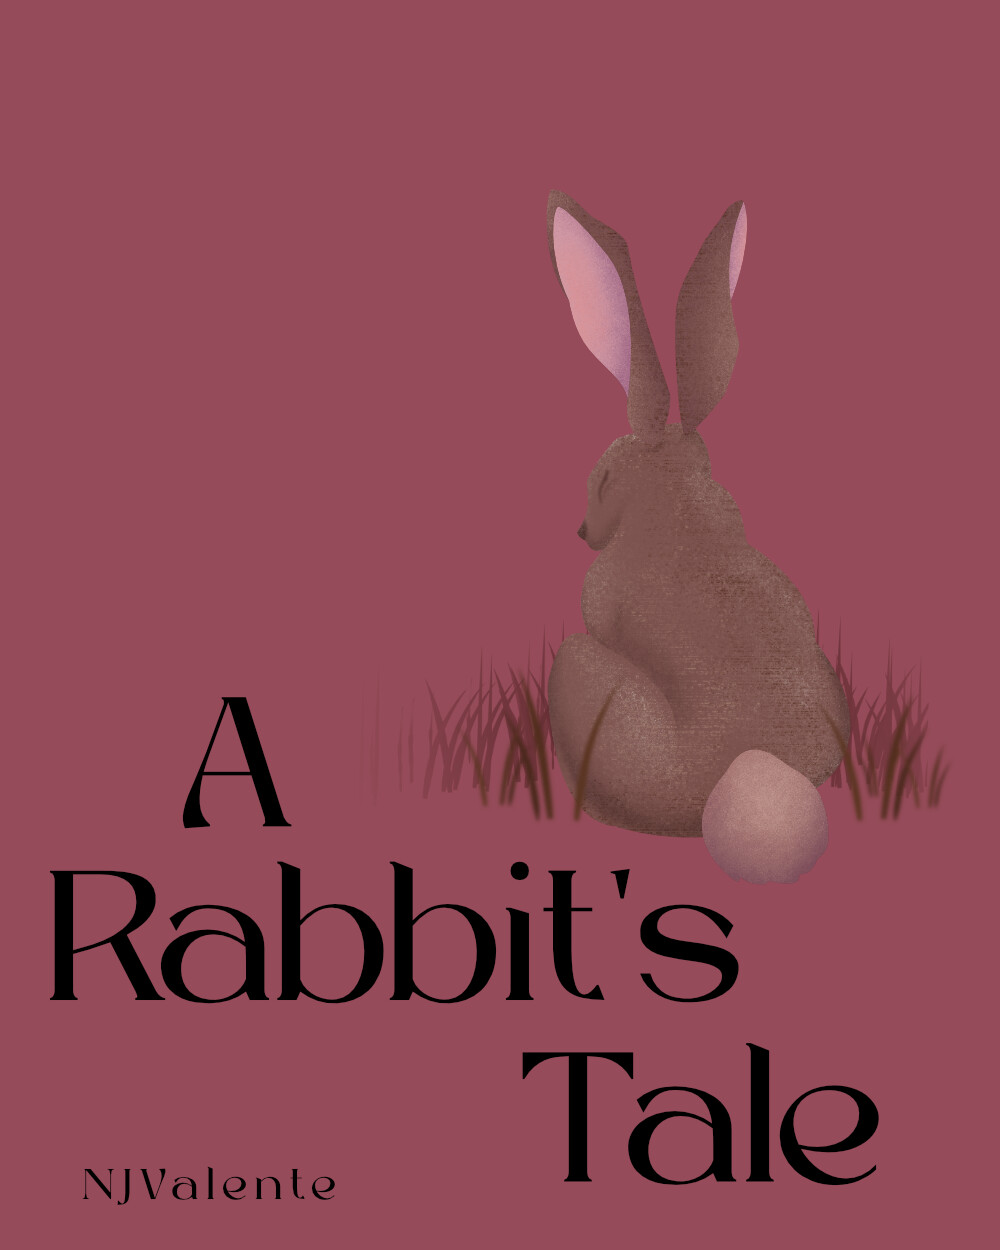 A Rabbit's Tale Book Cover Design